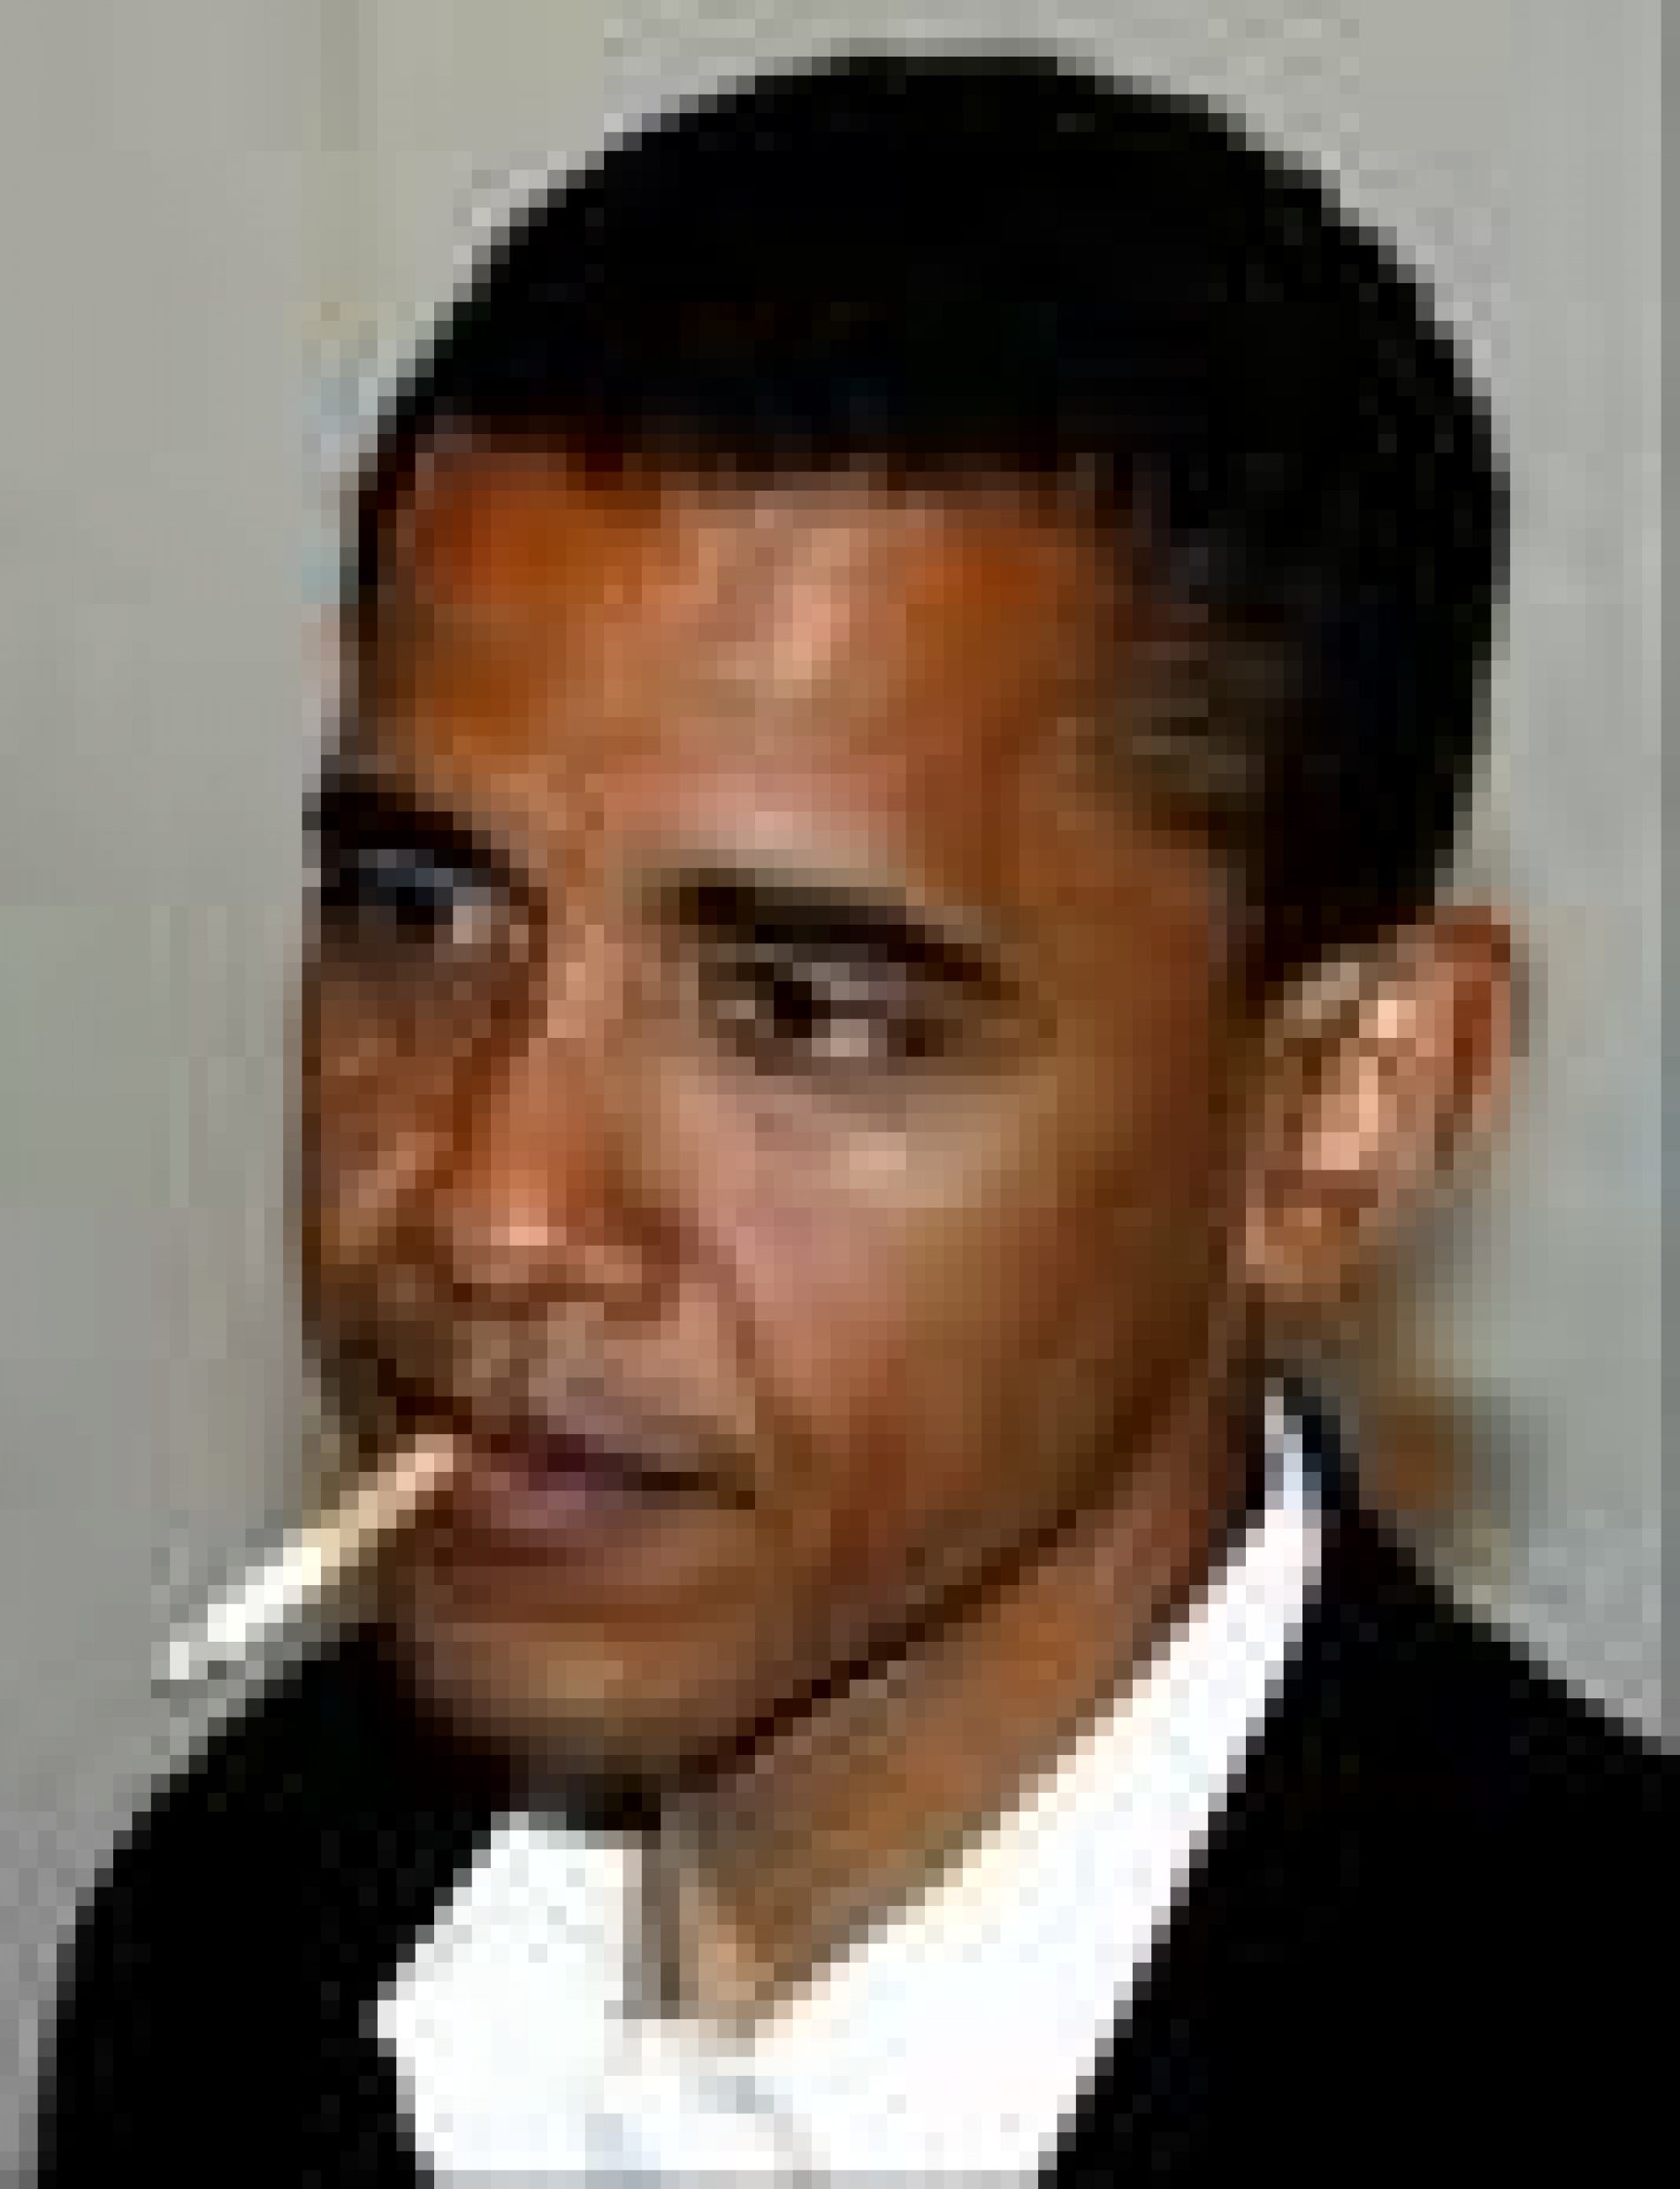 Let President Obama have a cigarette already???